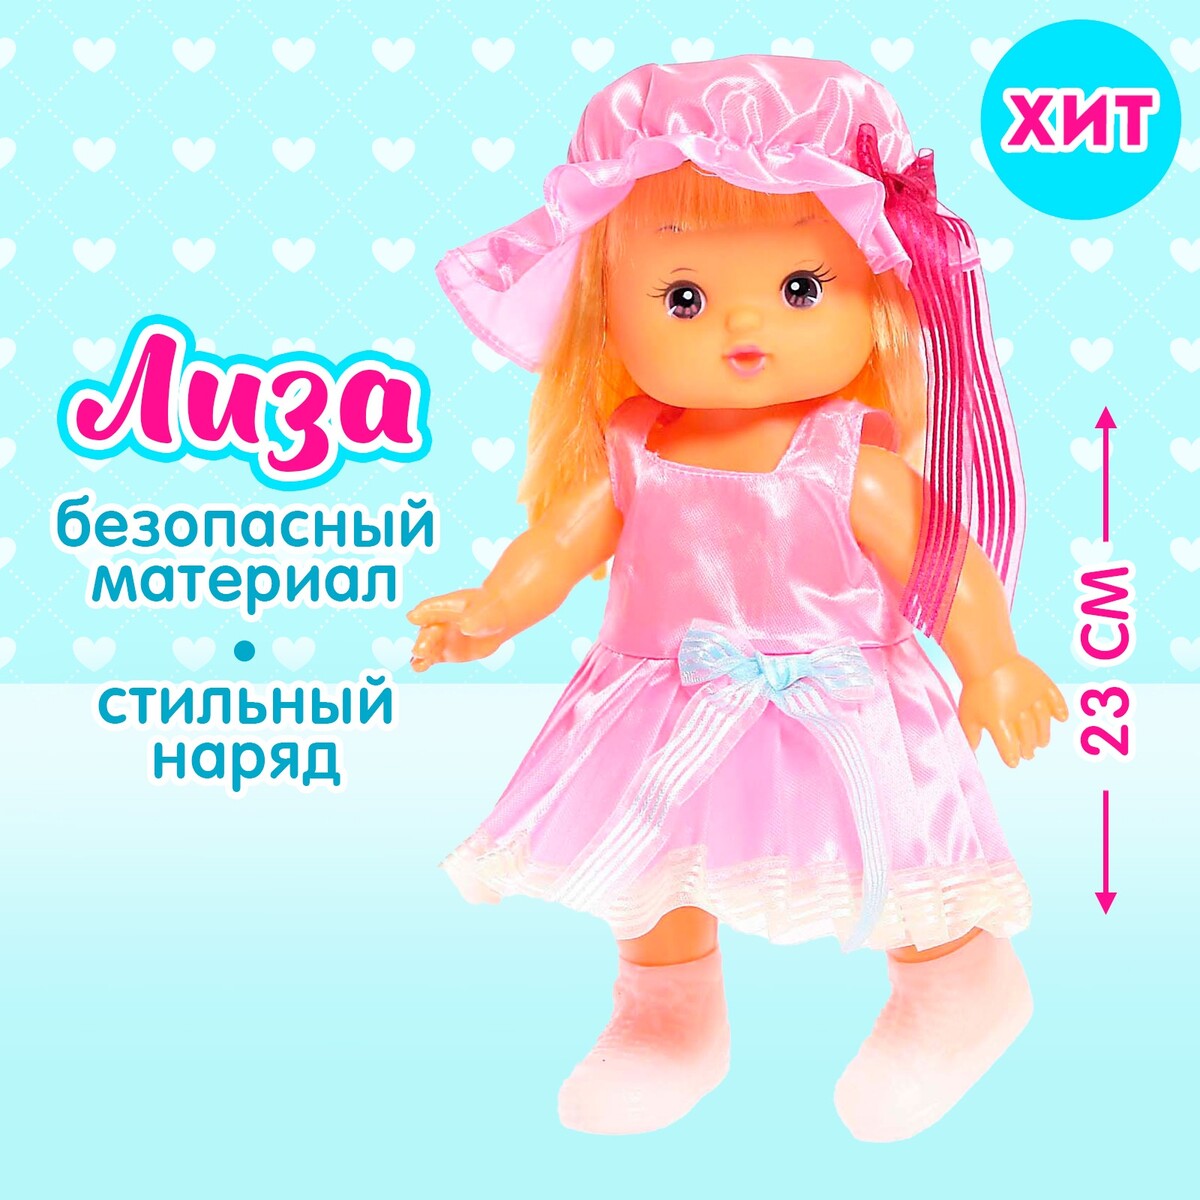 Кукла классическая кукла лиза 6